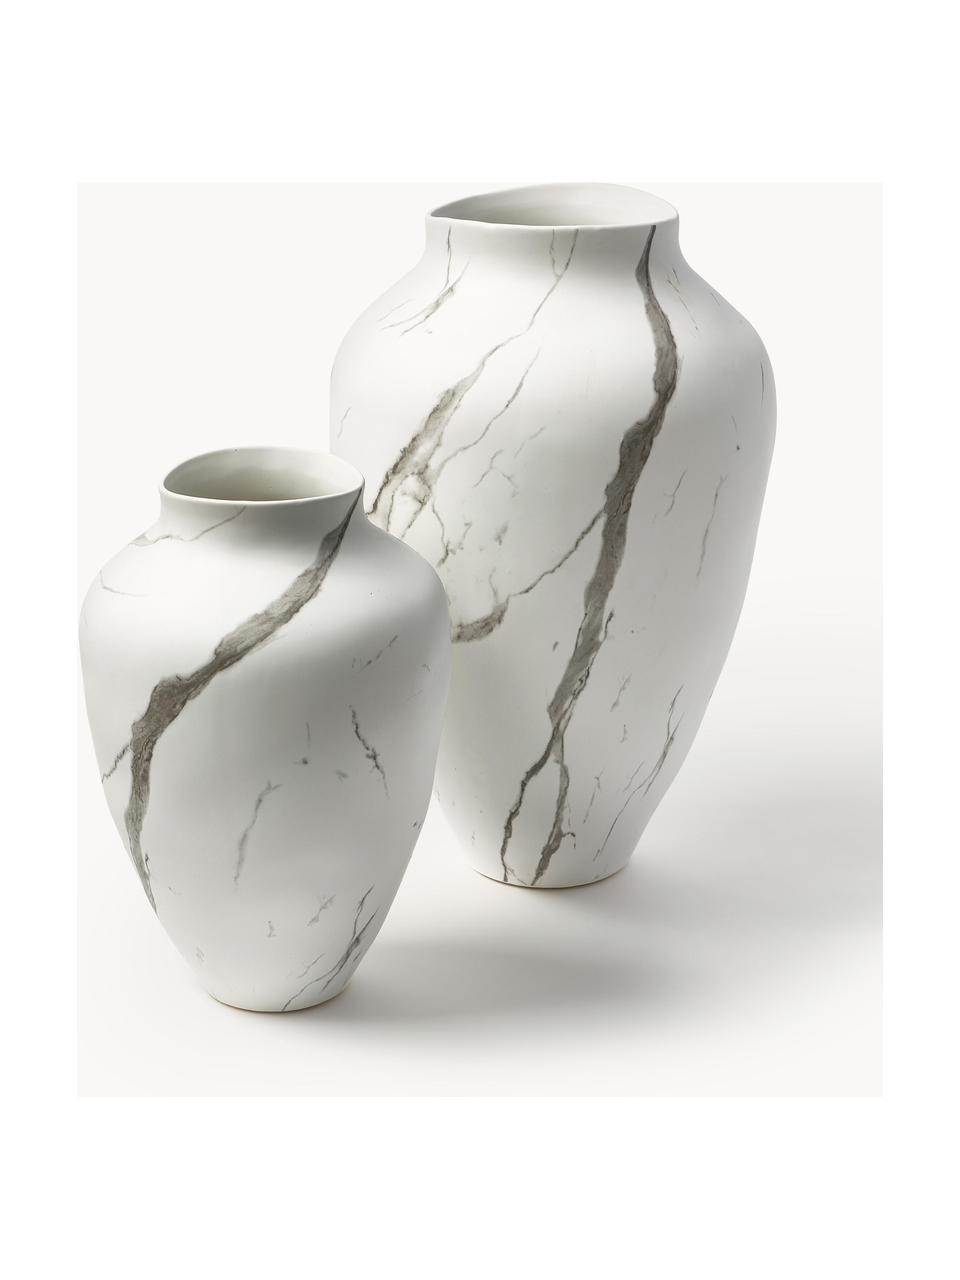 Ručně vyrobená váza Latona, V 41 cm, Kamenina, Bílá, šedá, mramorovaná, matná, Ø 27 cm, V 41 cm